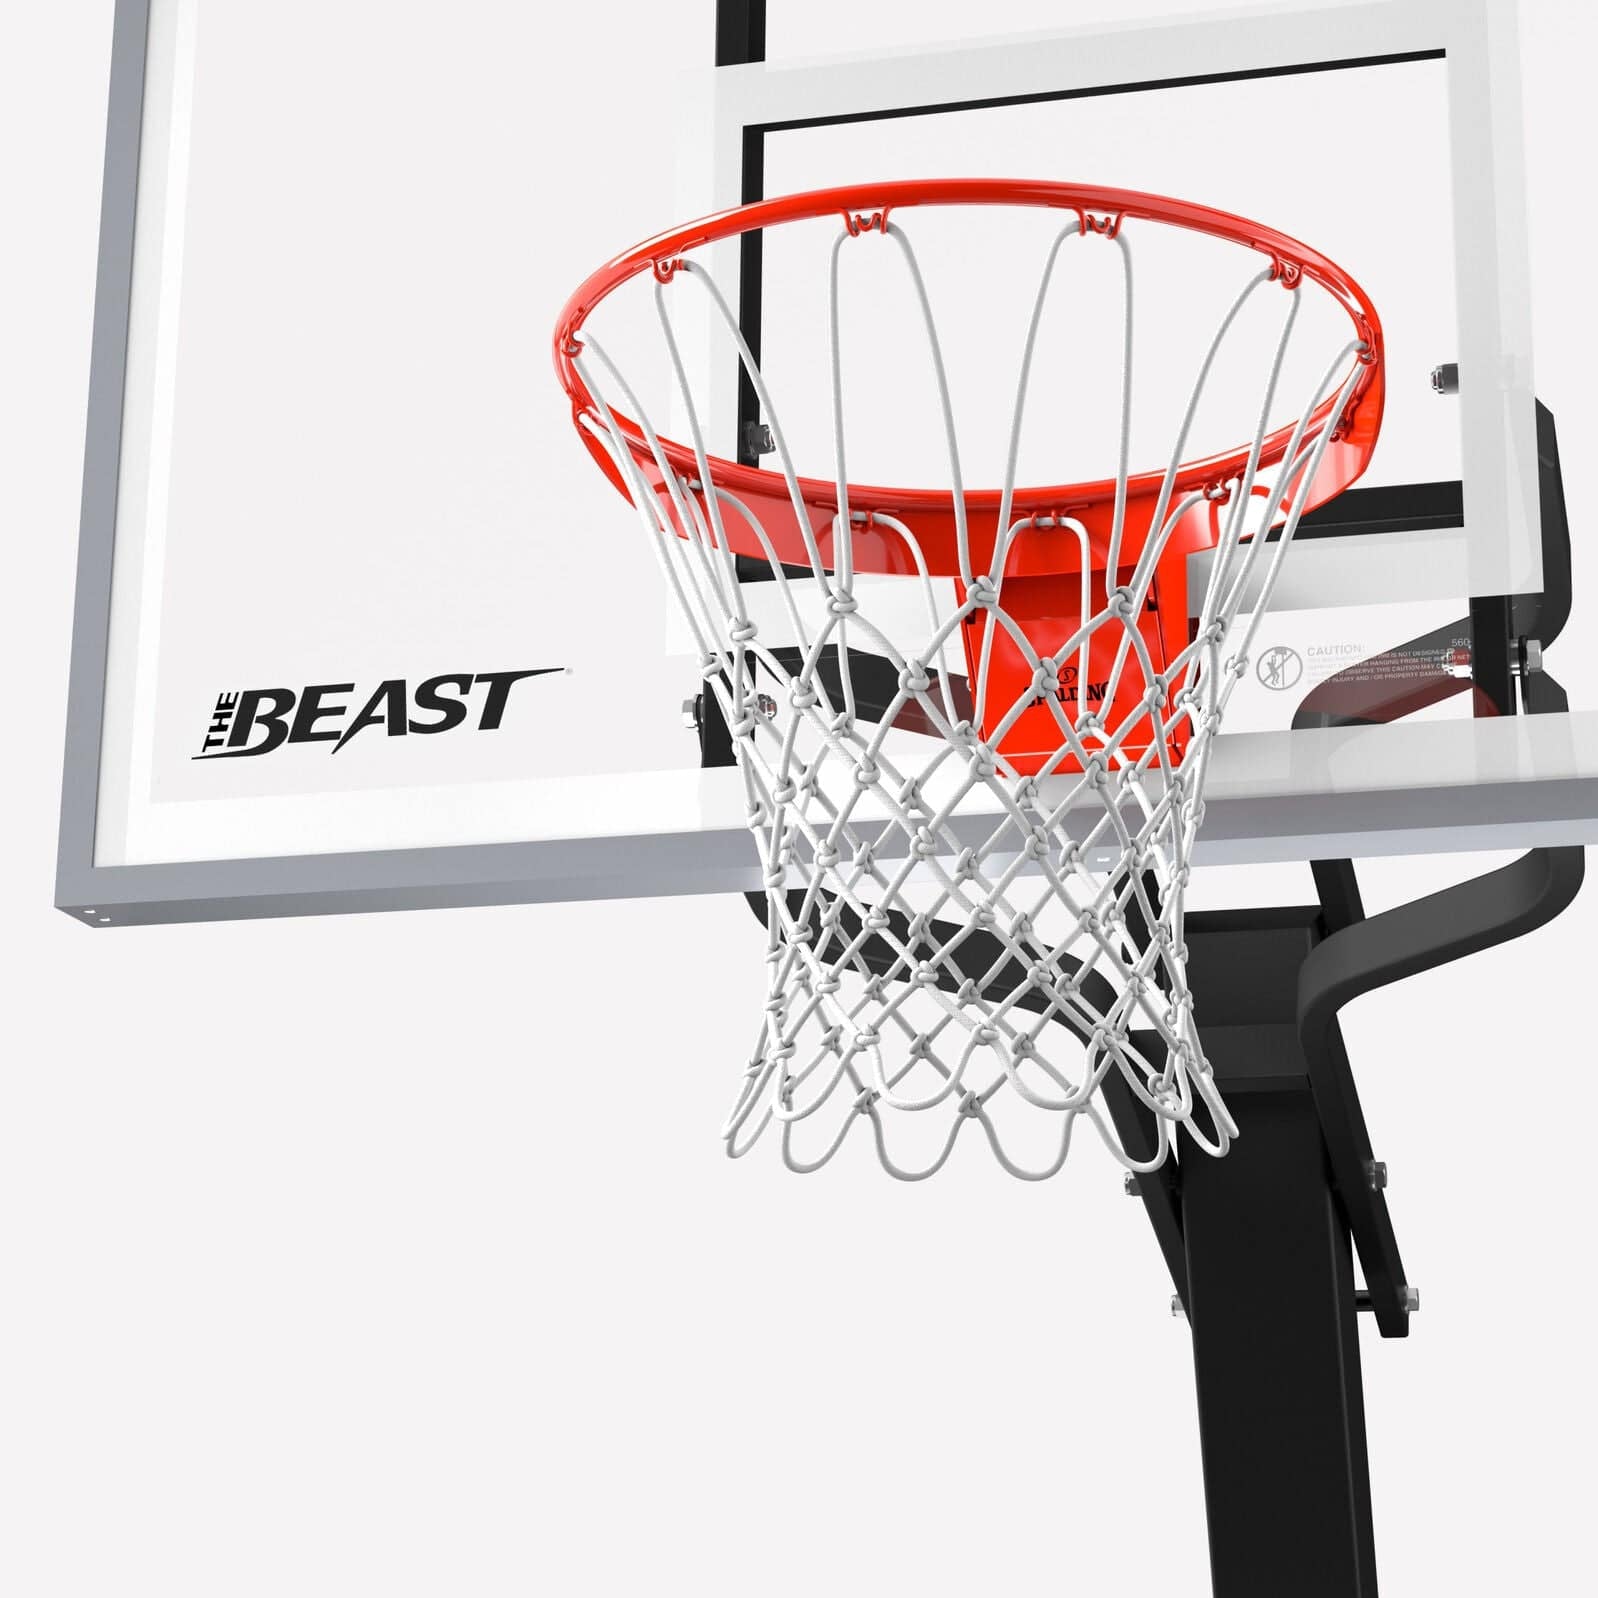 54 Inch Basketball Hoop